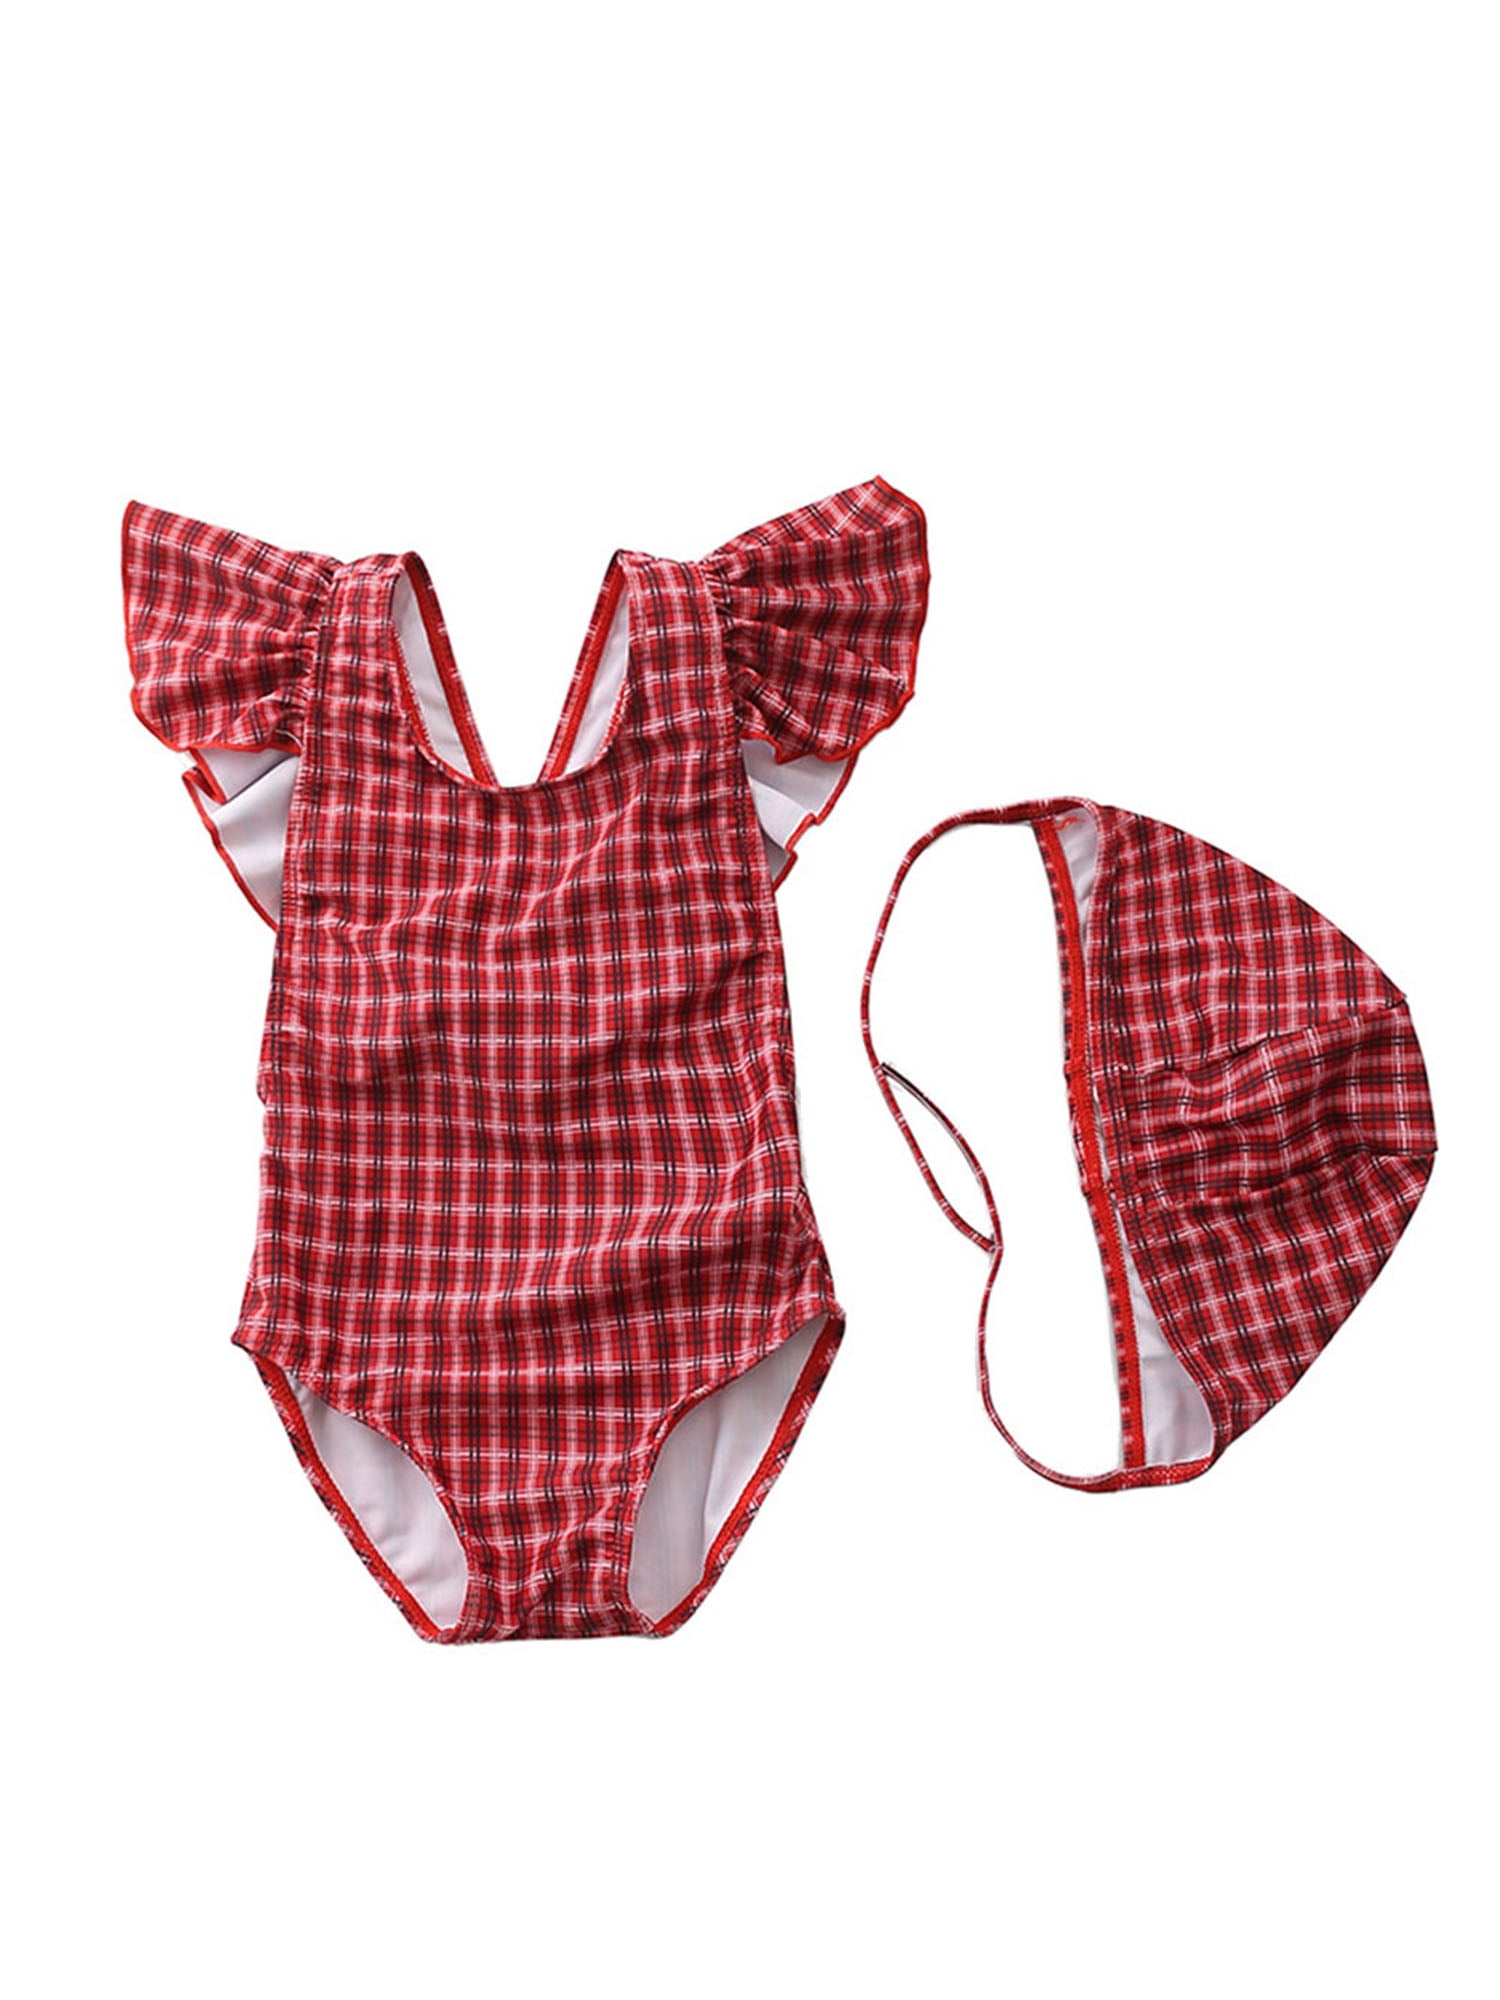 Infant Baby Girls Swimsuits Red Stripe Romper Bathing Suit One Piece Swimwear Bikini Outfits 